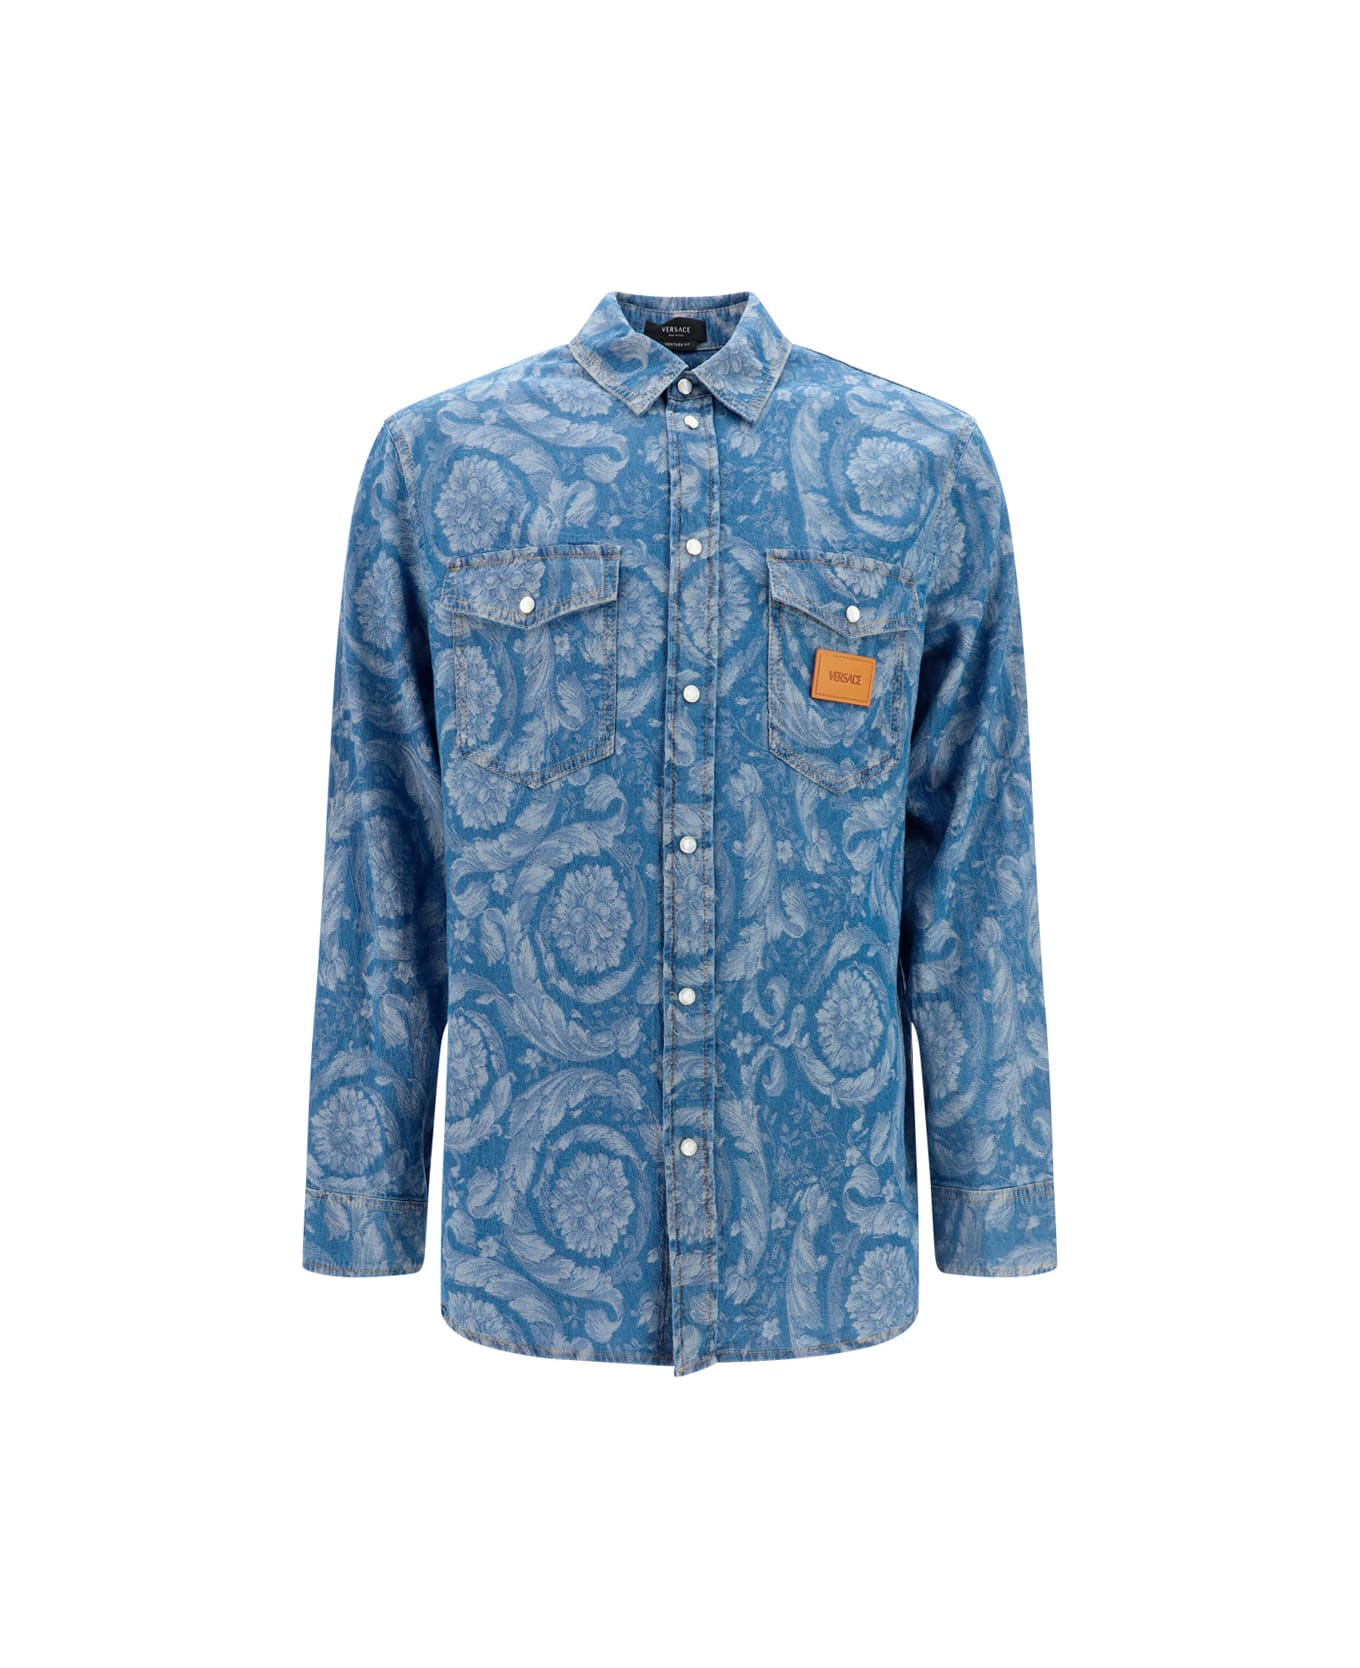 Versace Light Blue Cotton Denim Shirt - Blu Medio Lavato